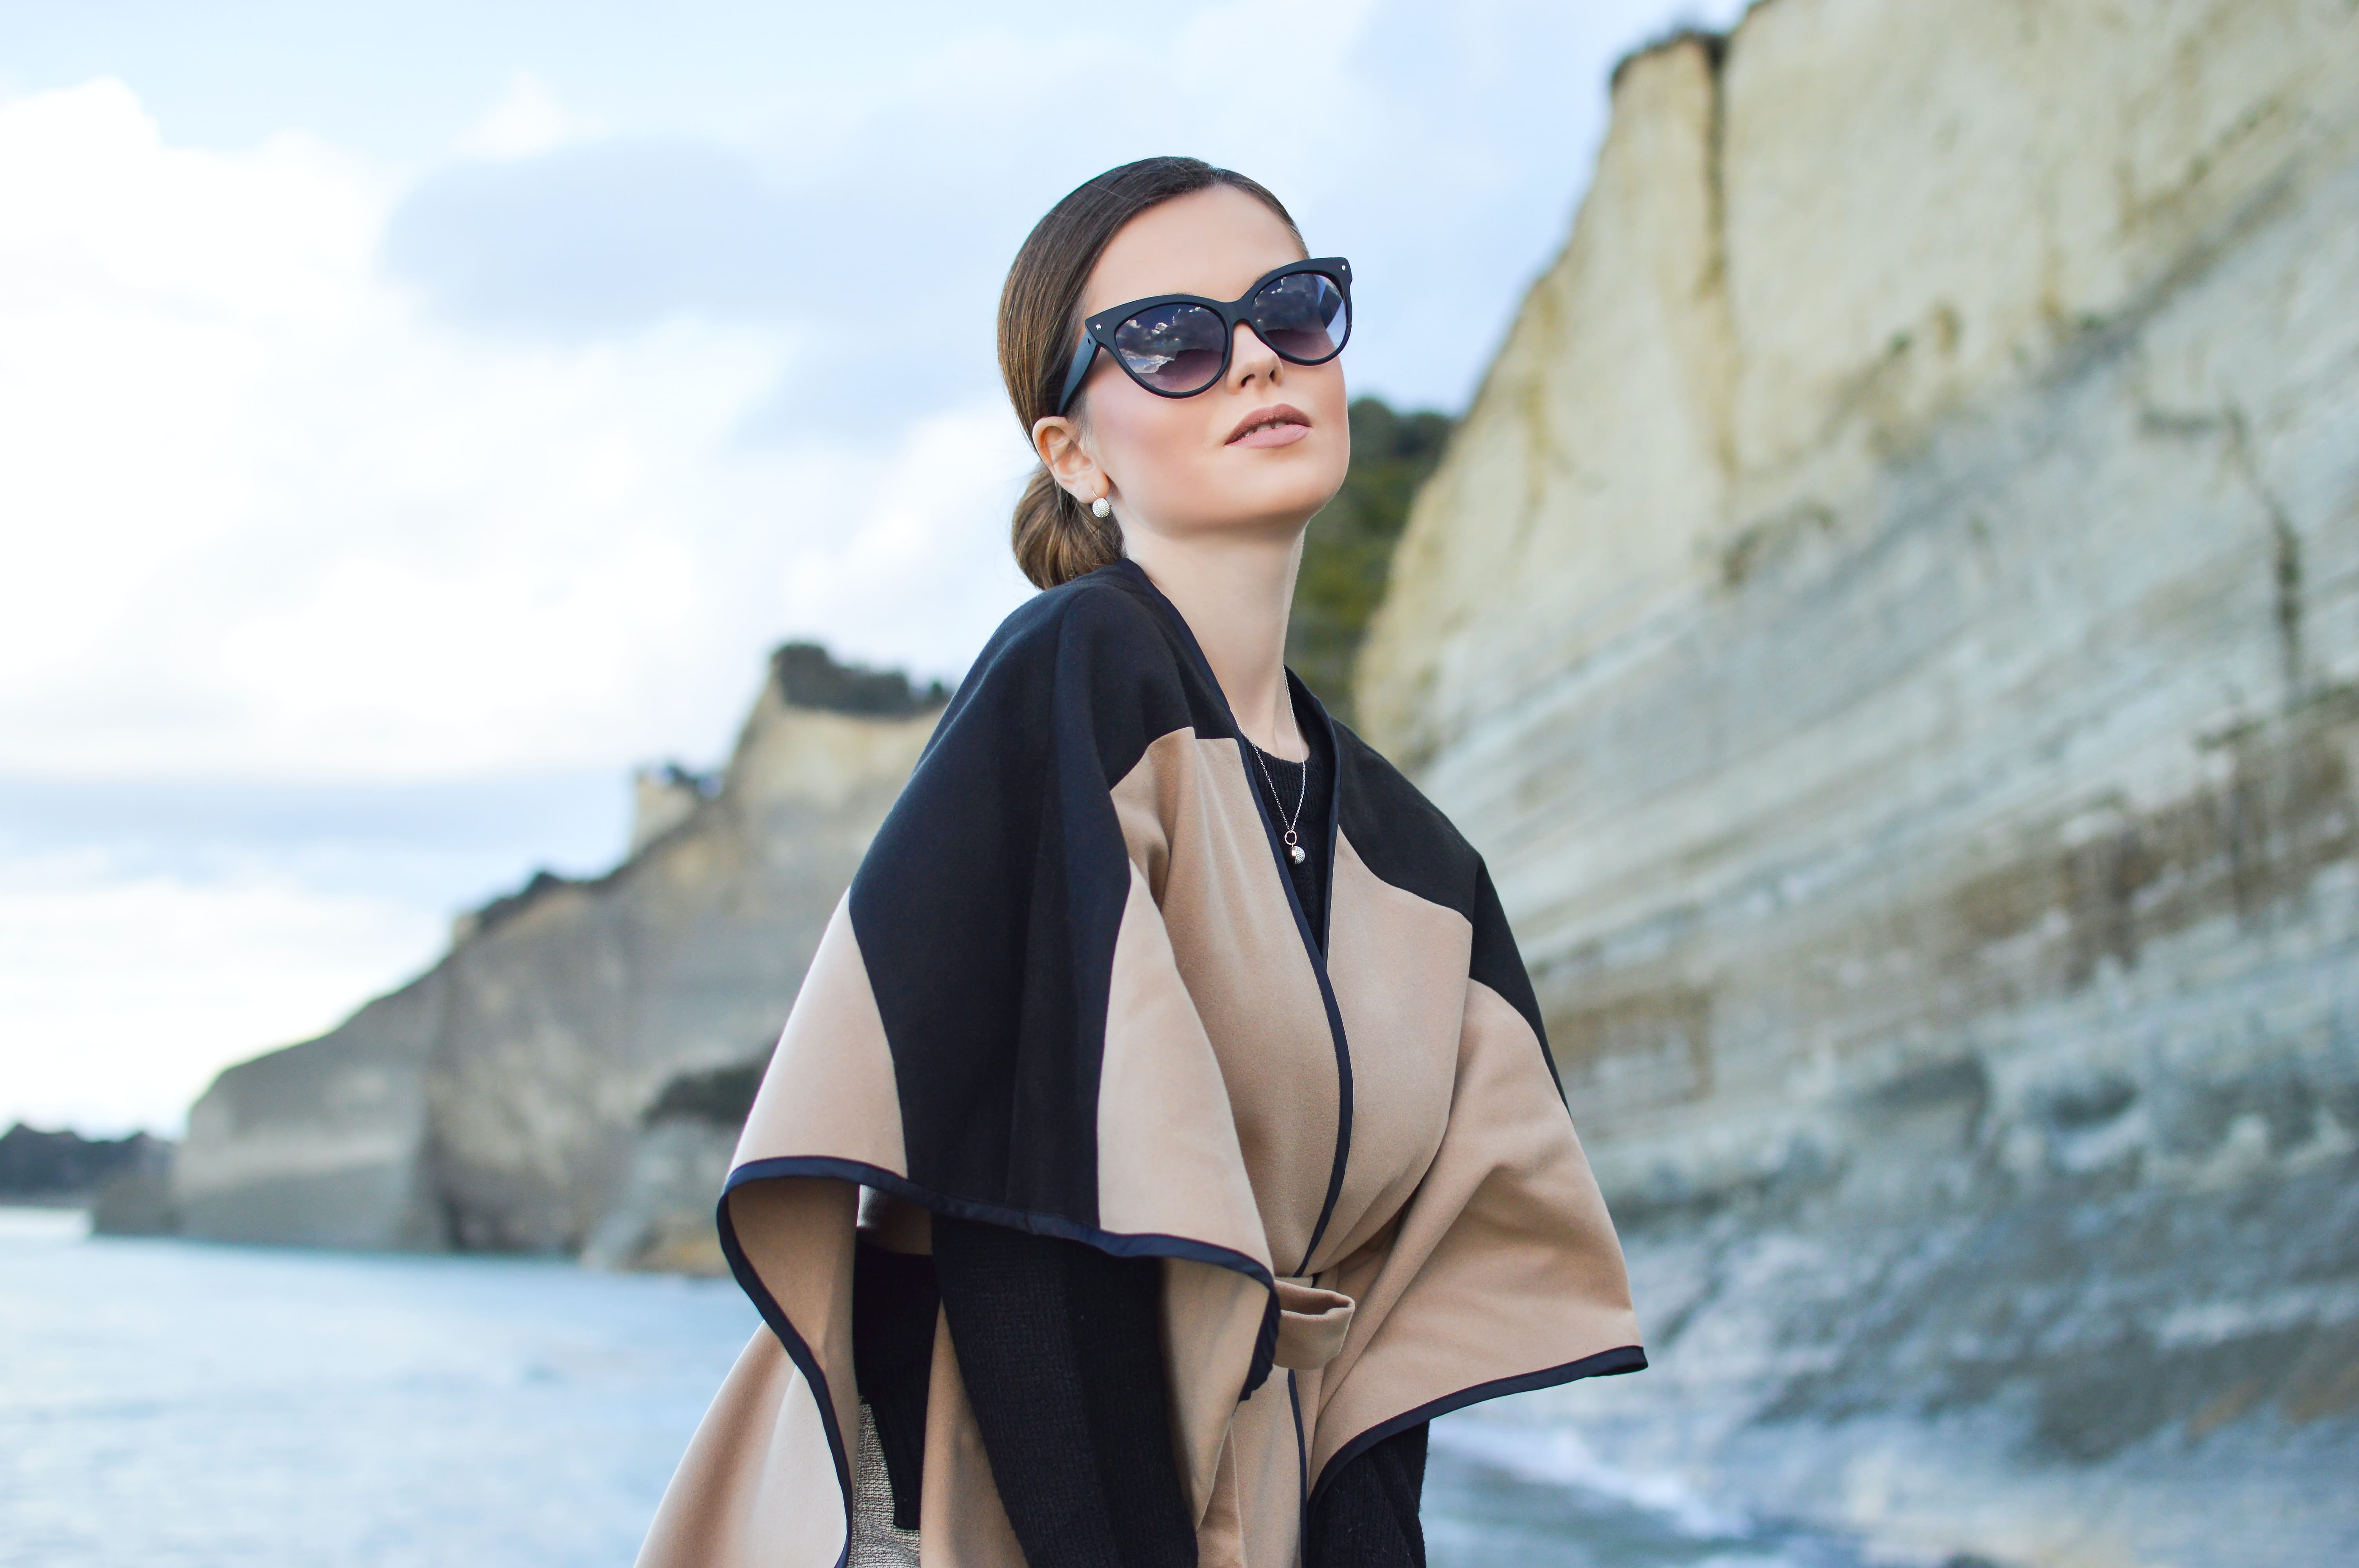 Wrap coat - AW21 fashion trends. Photo by Tamara Bellis, Unsplash 